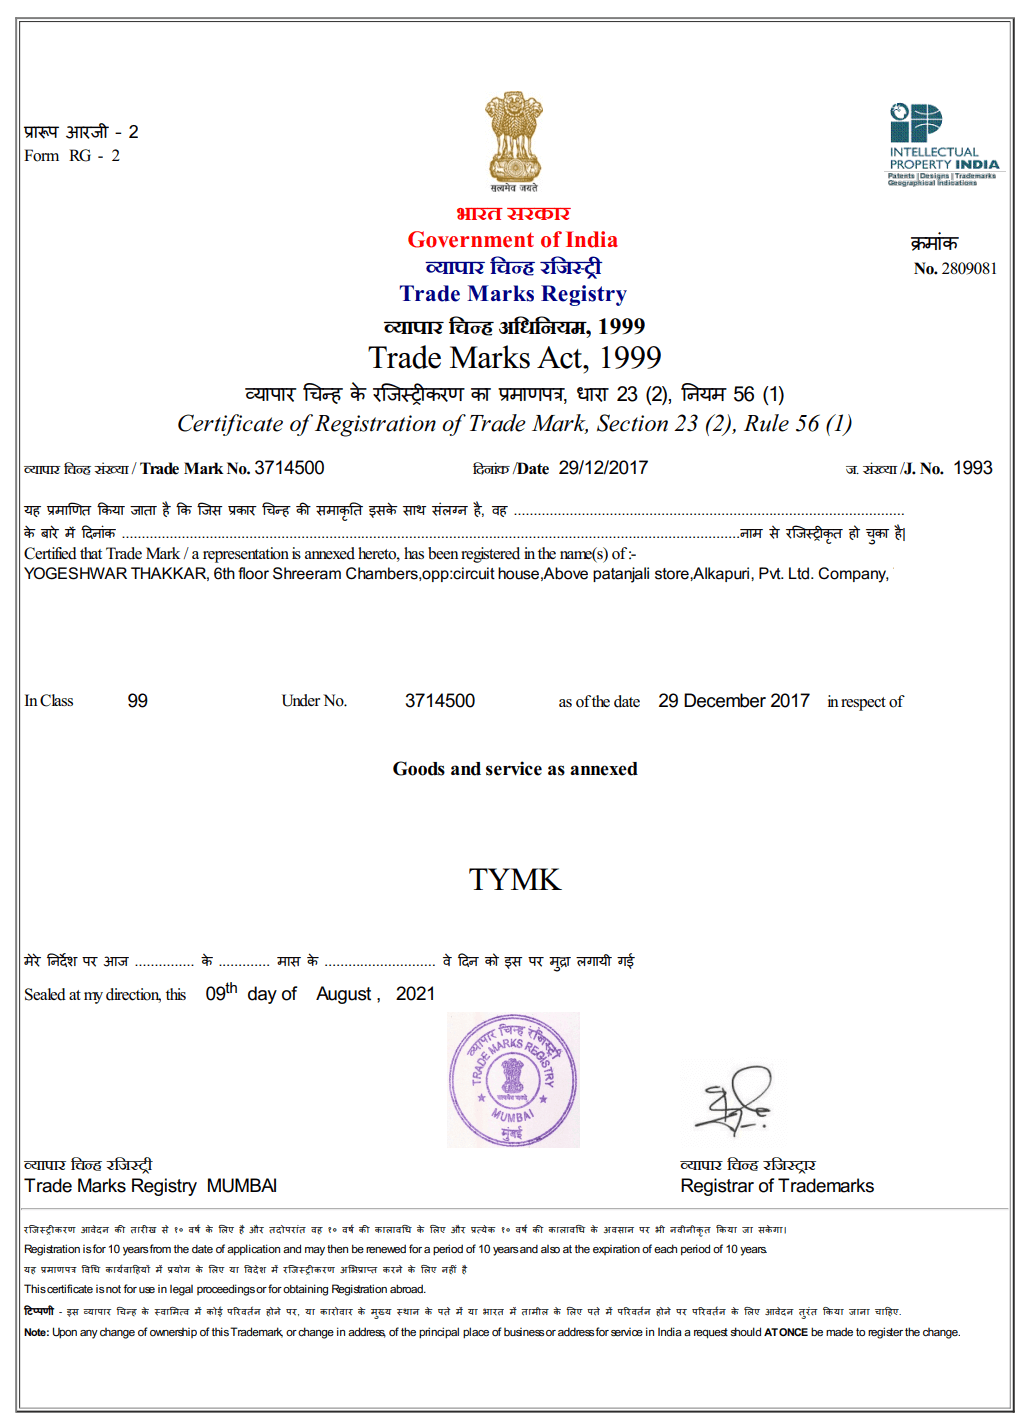 TYMK Trademark Certificate